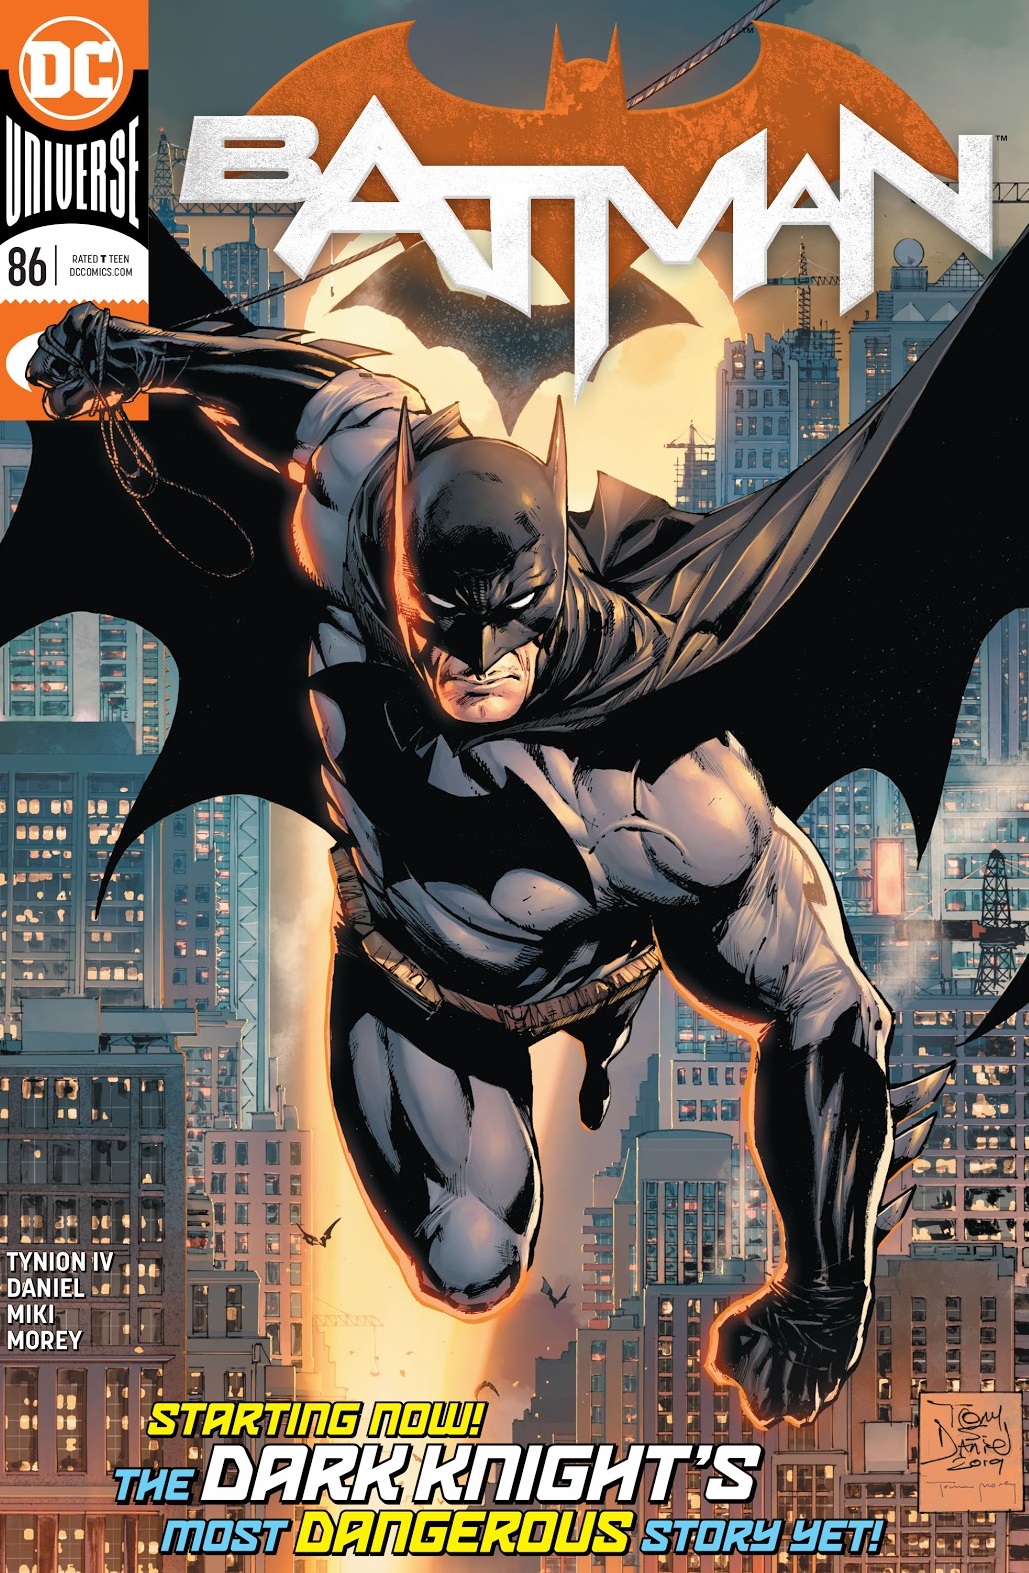 Batman Issue 86 review